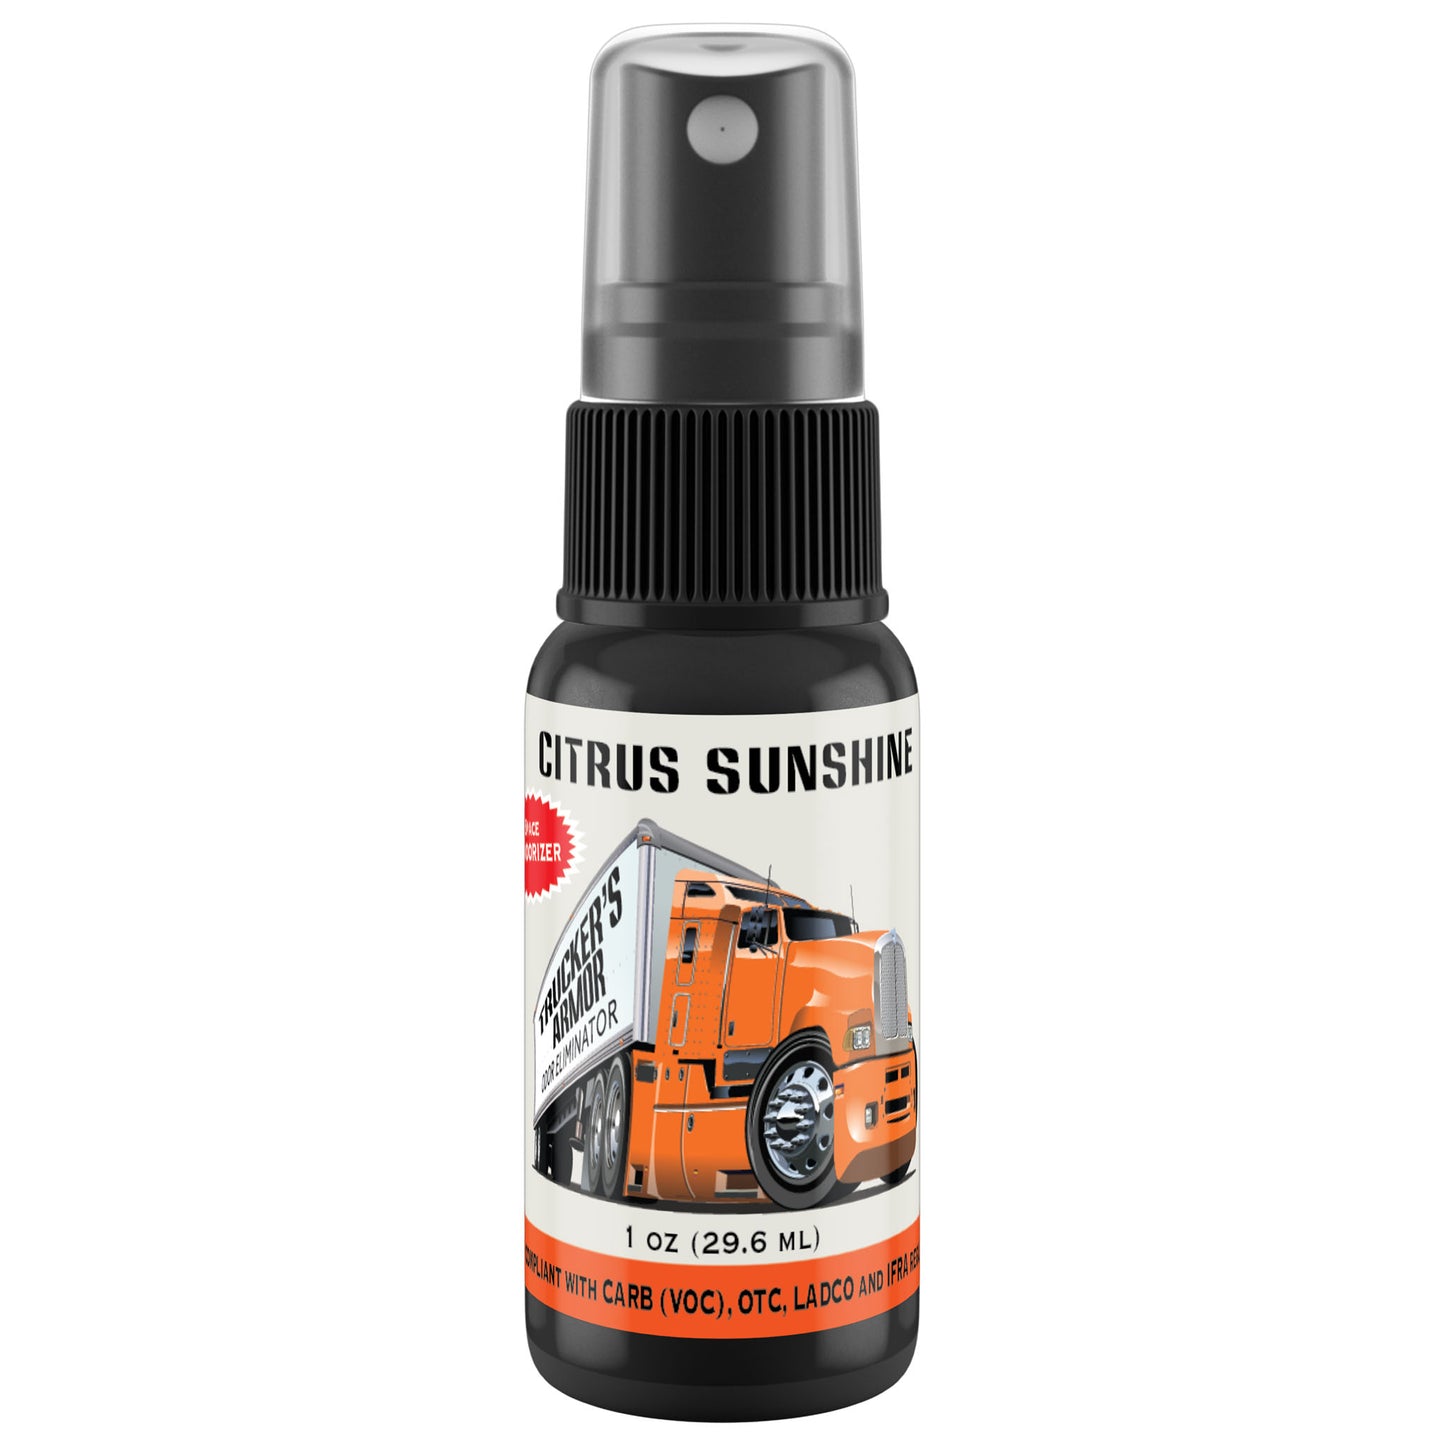 Trucker's Armor Odor Eliminator - Citrus Sunshine Scent